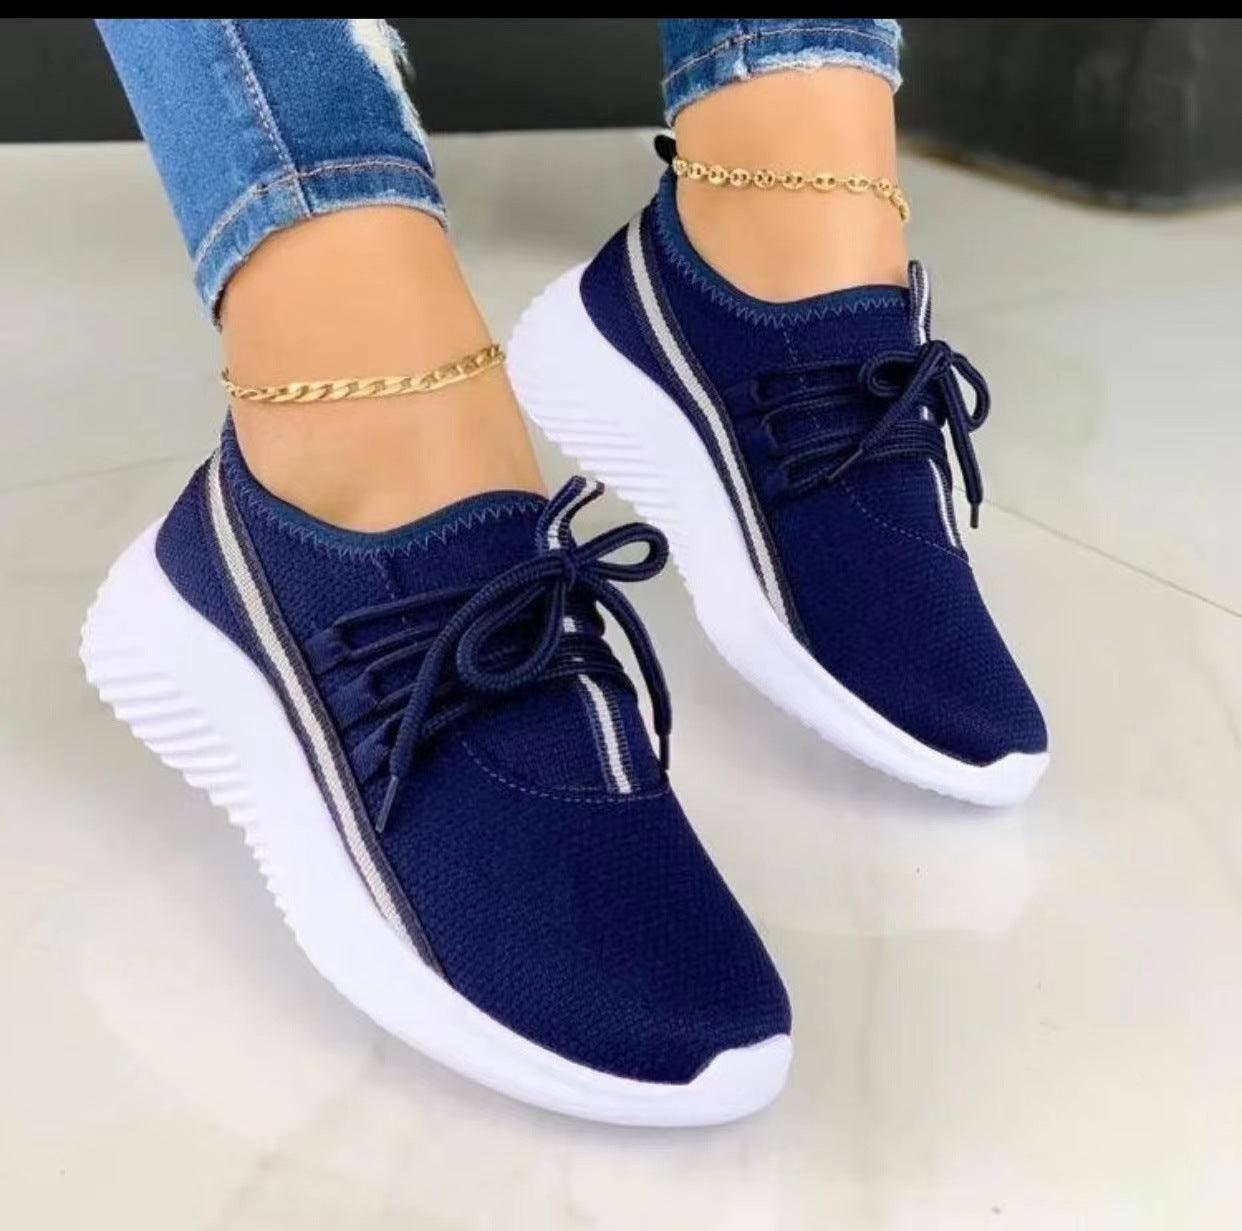 Stripe Sneakers For Women Sports Shoes-Navy blue-2